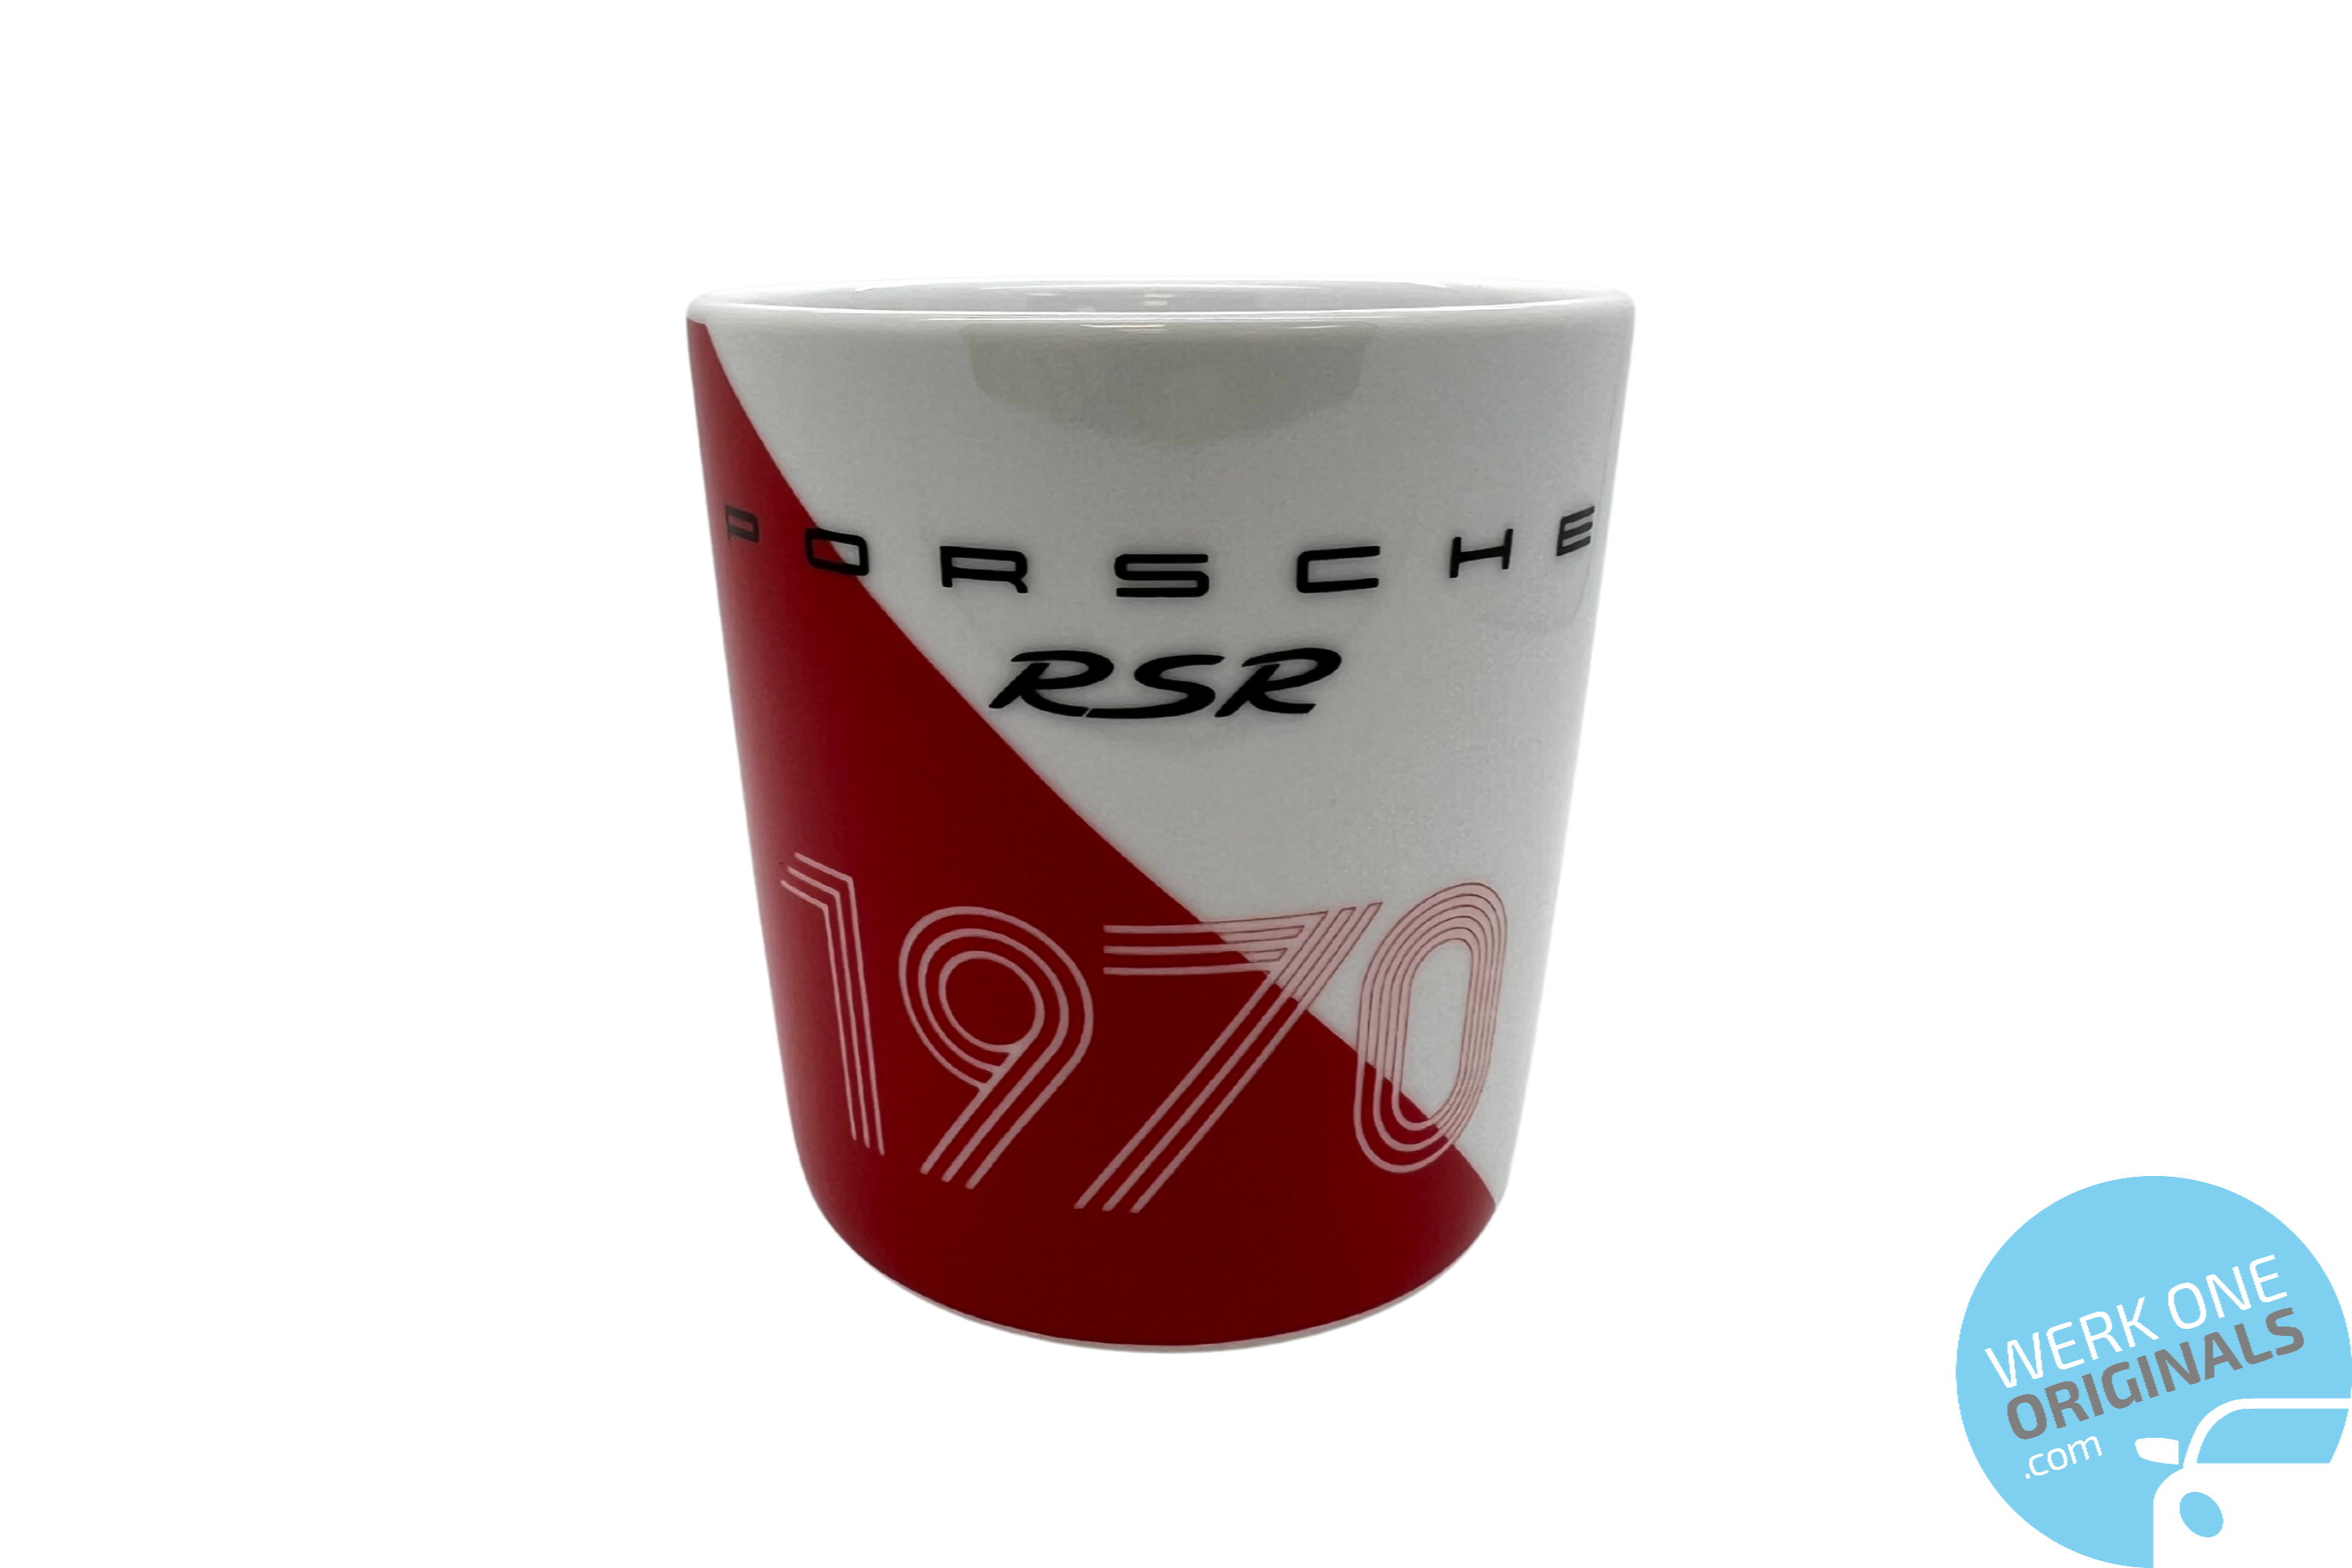 Official Porsche Collectors Cup No.1 - Le Mans 'RSR 1970' Livery Mug - 500ml